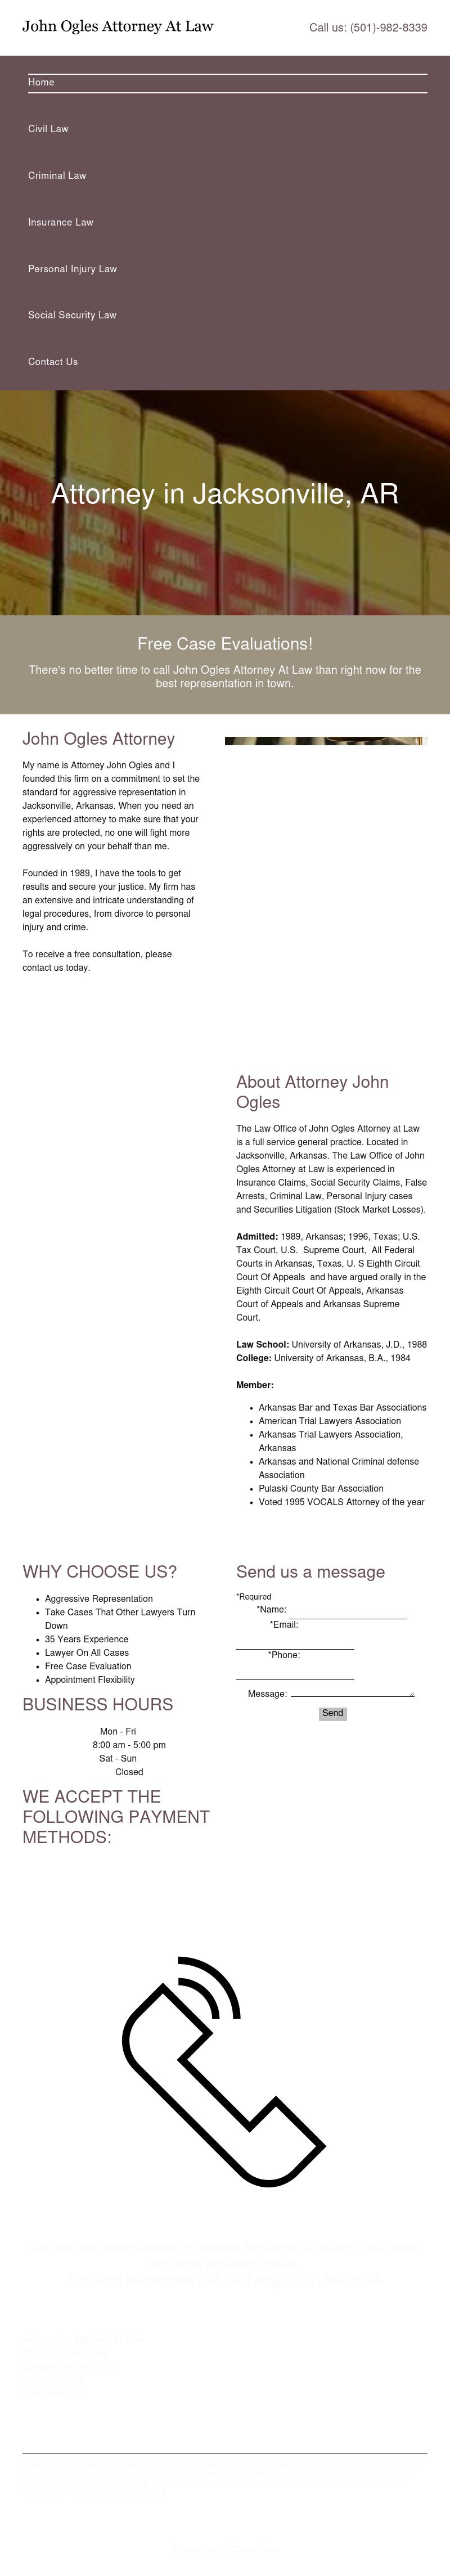 Ogles John Atty - Jacksonville AR Lawyers